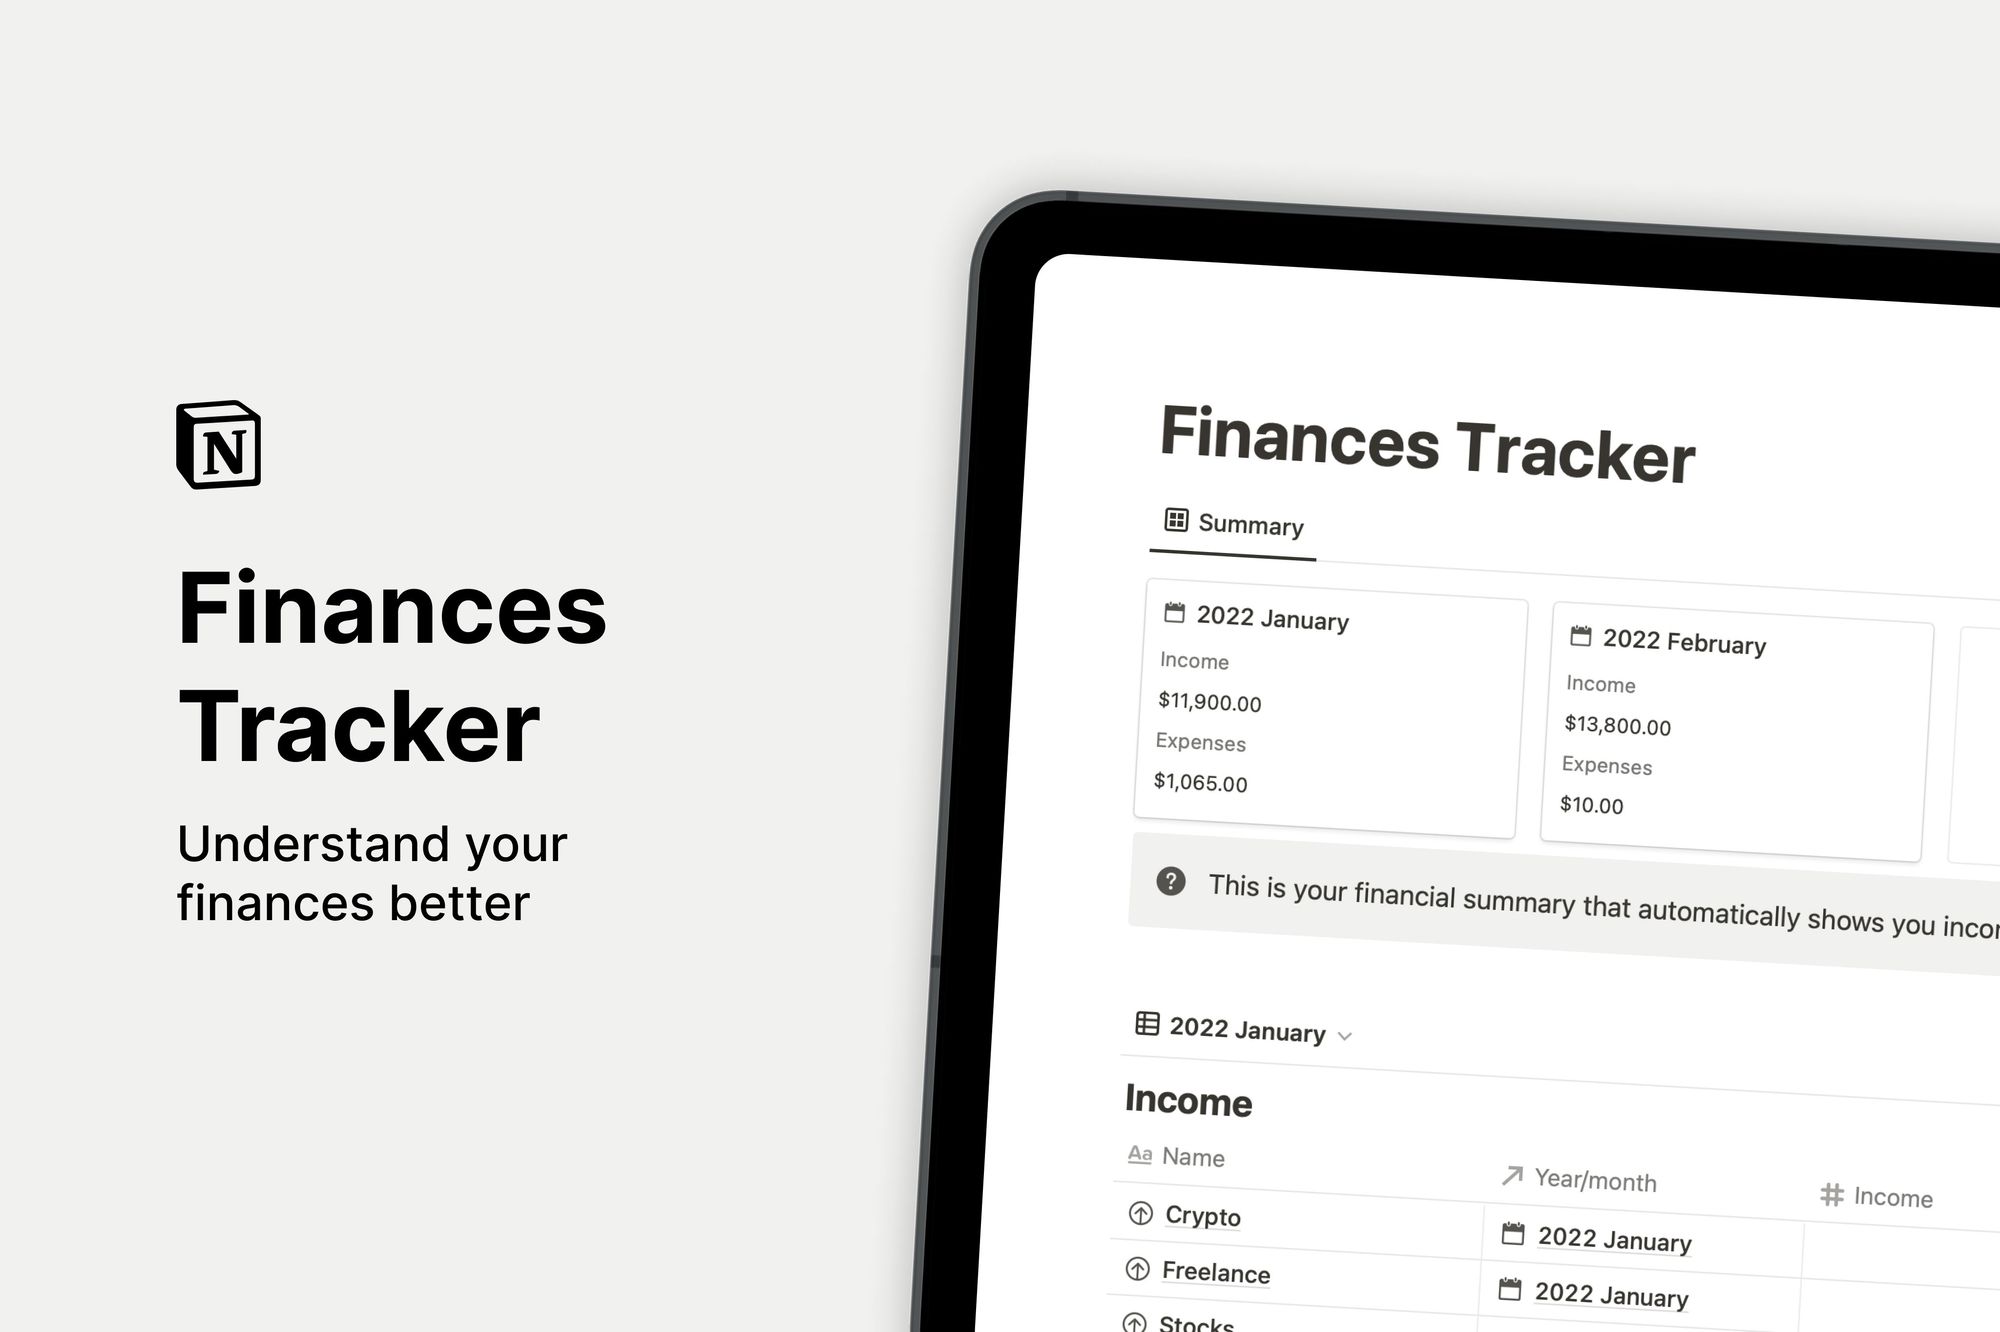 Finances Tracker